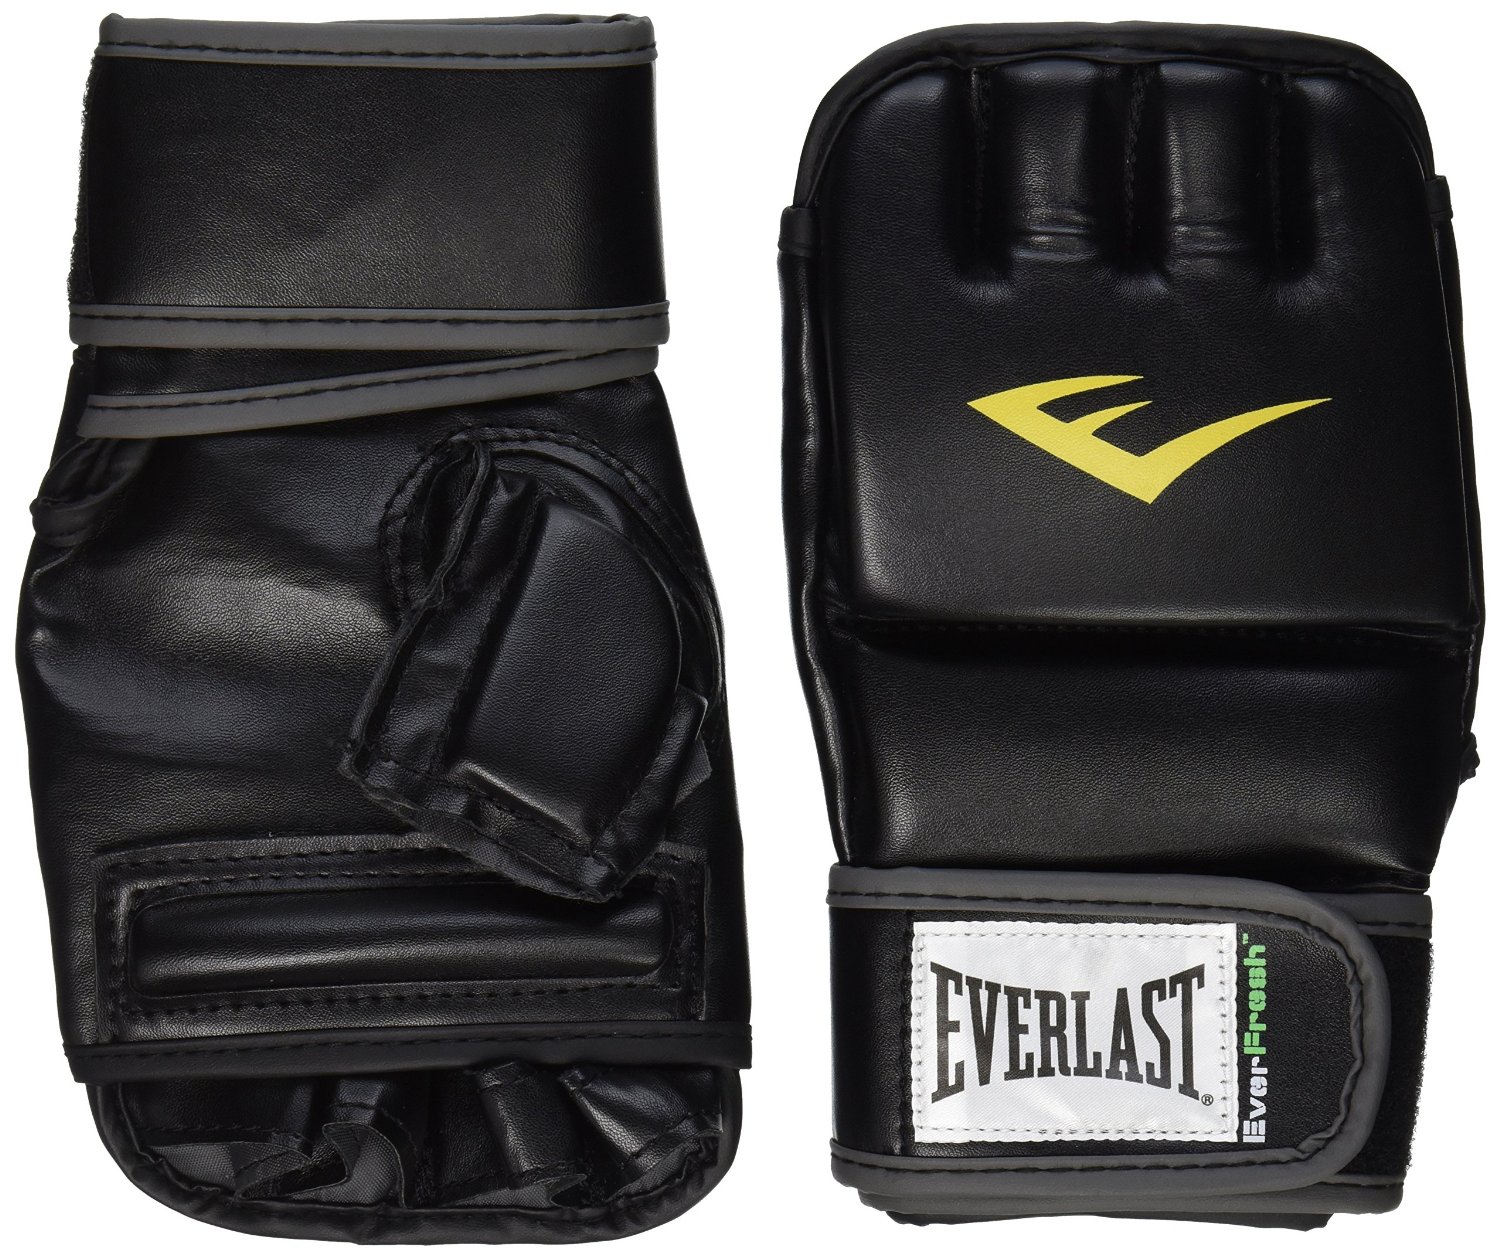 Everlast Wristwrap Heavy Bag Gloves Boxing L/XL MMA 4301LXL | eBay